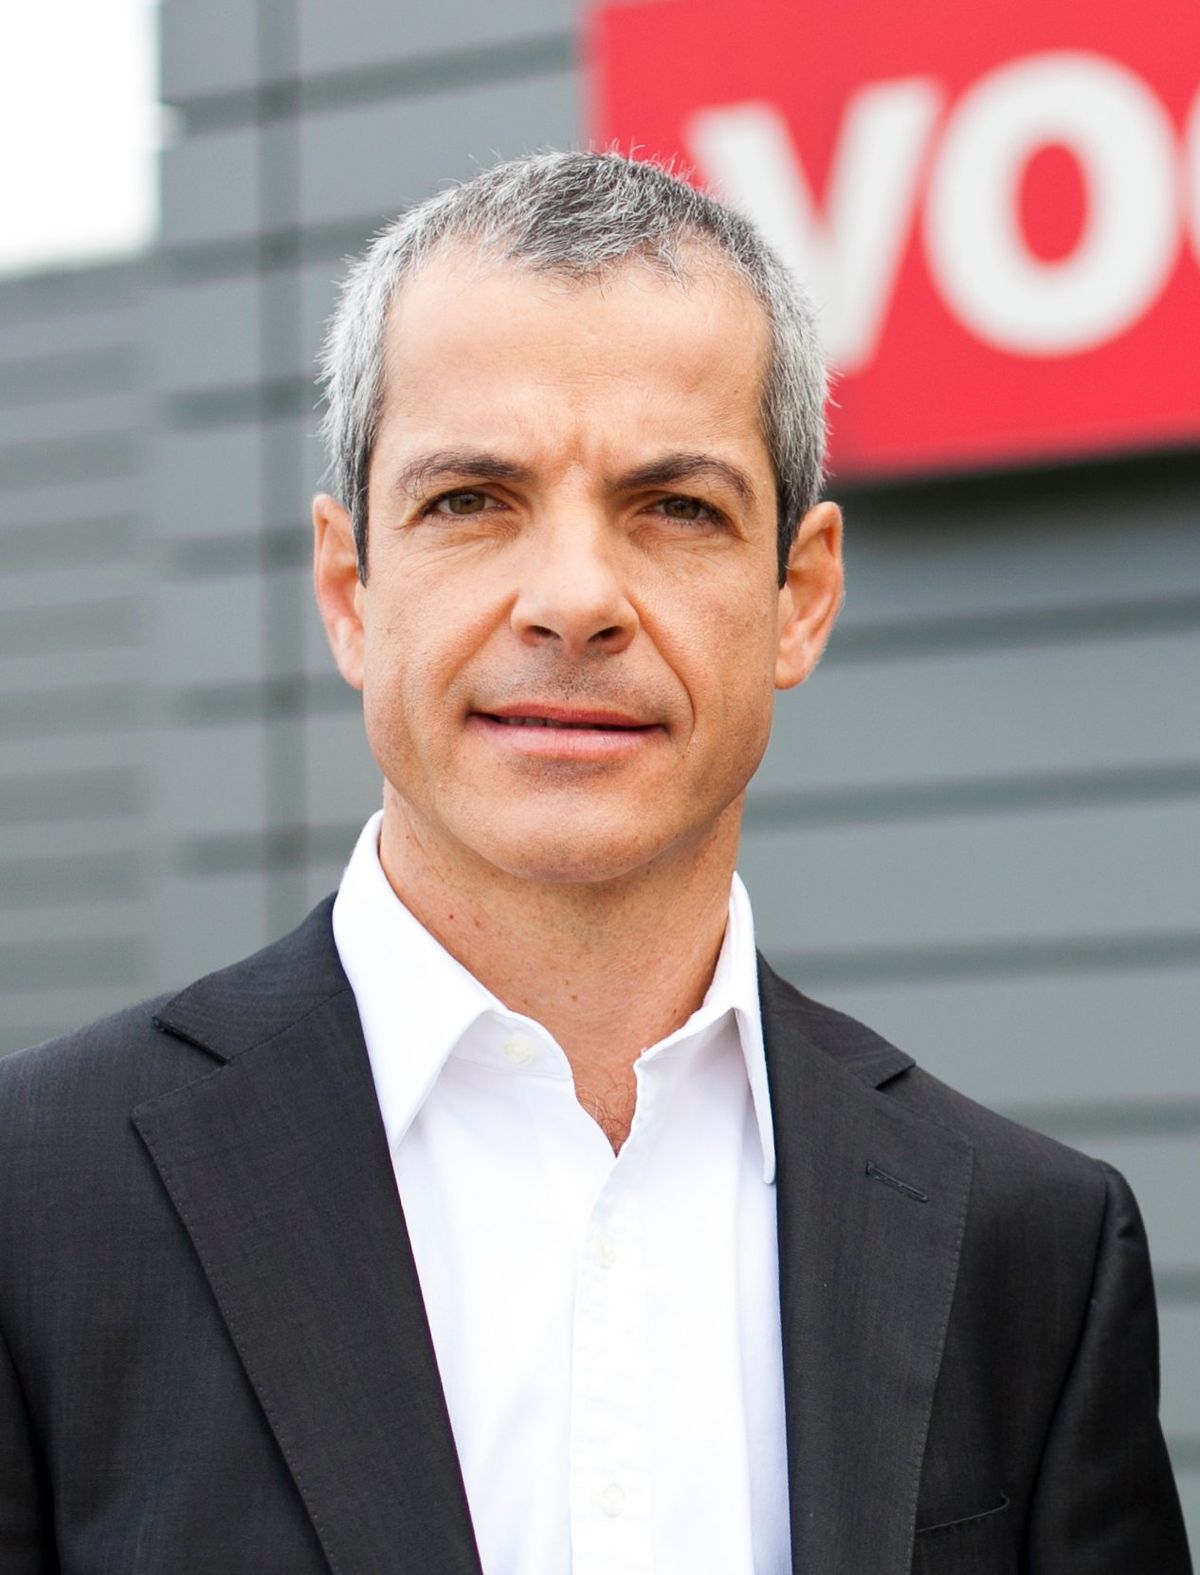 Interview 2: Diego Massidda, Former CEO, Vodafone Hungary